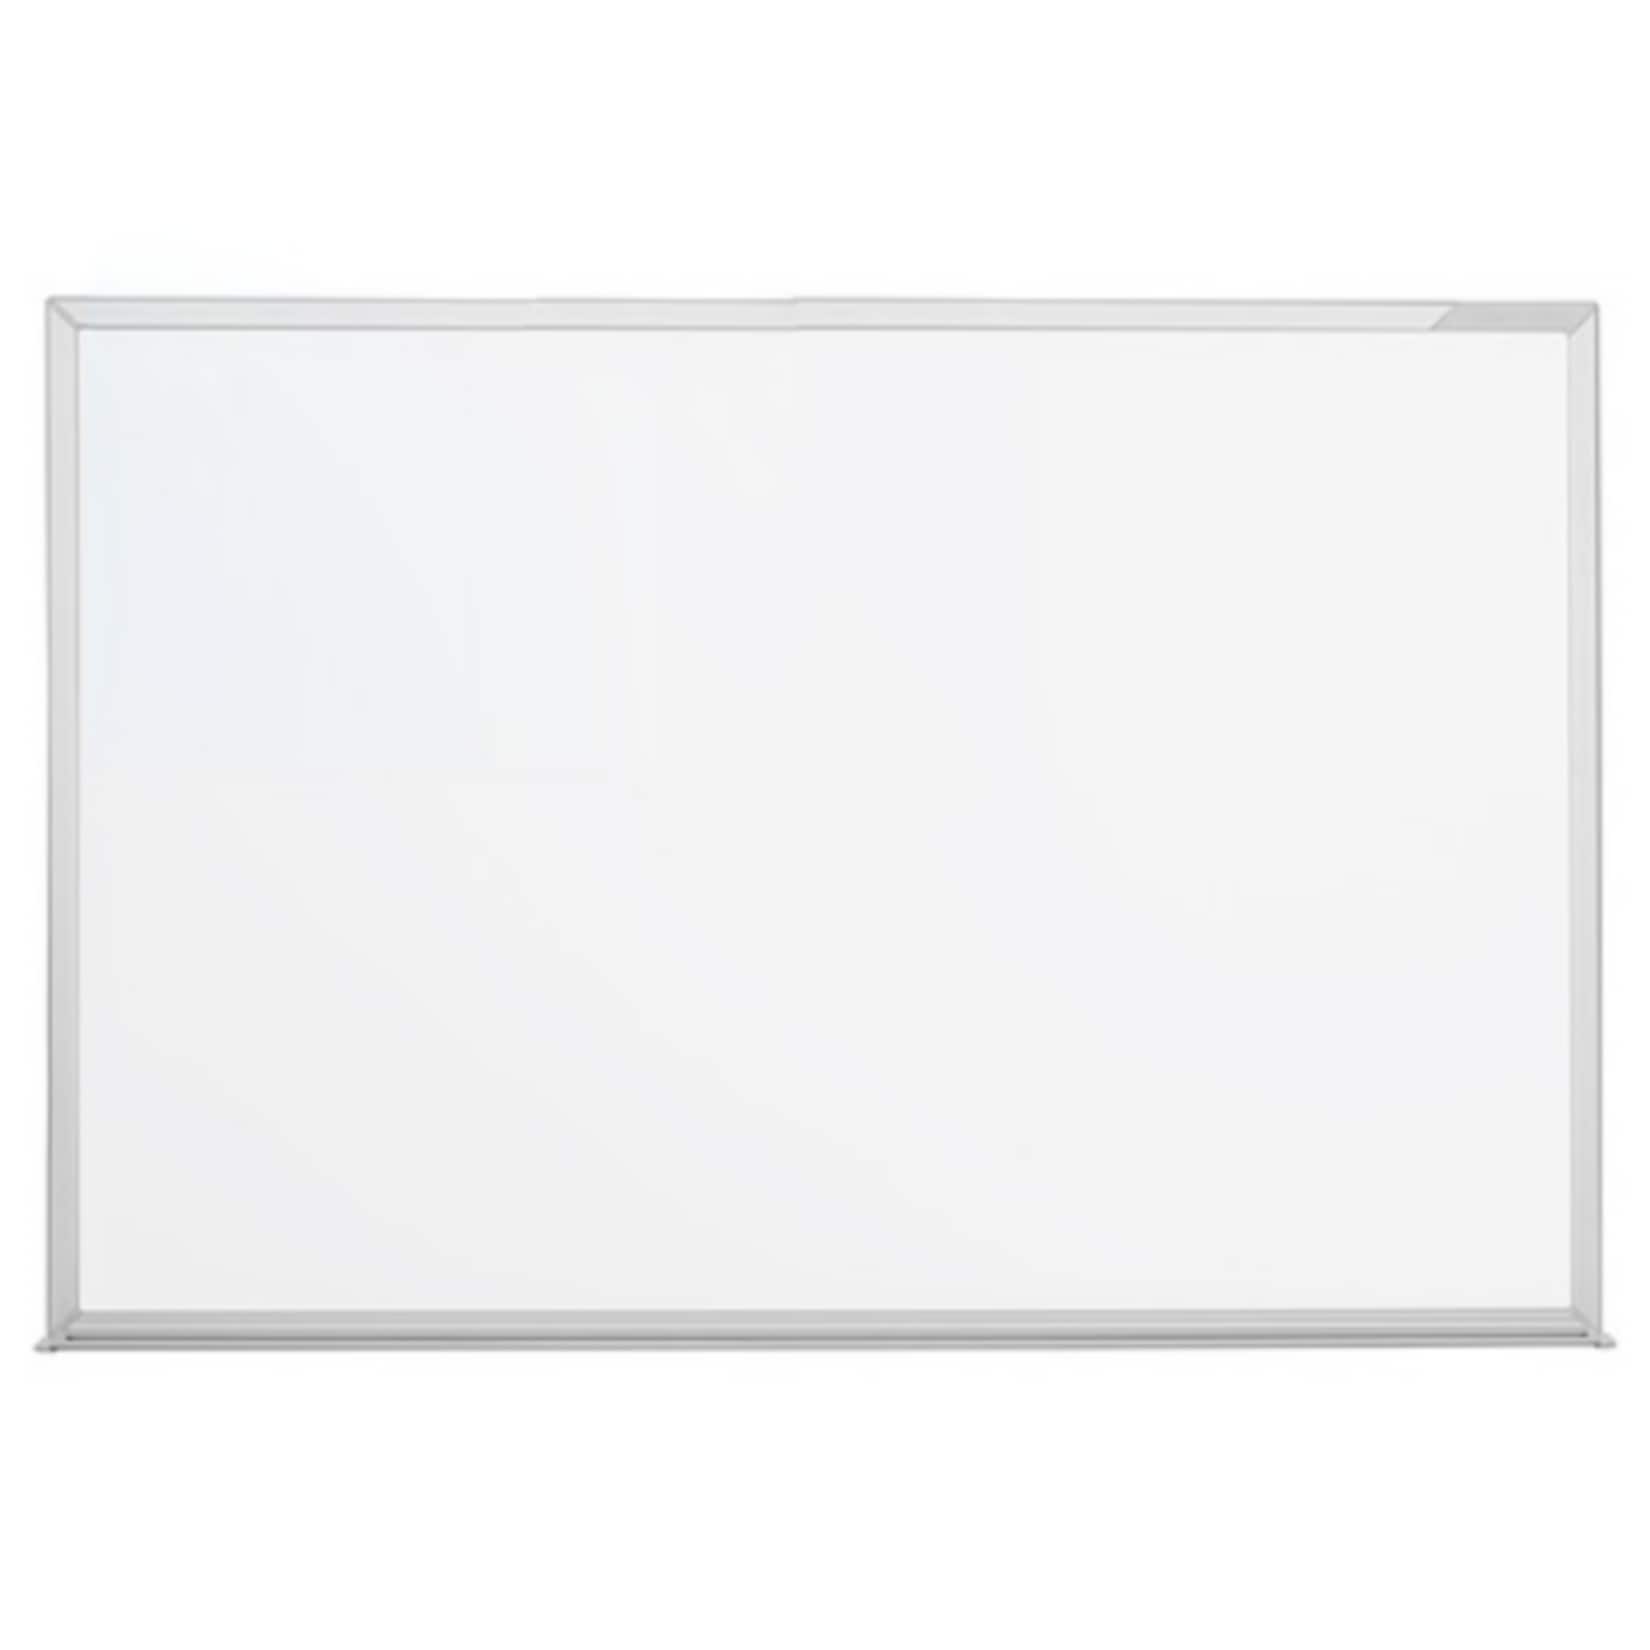 magnetoplan Design-Whiteboard CC - 1800 x 1200 mm